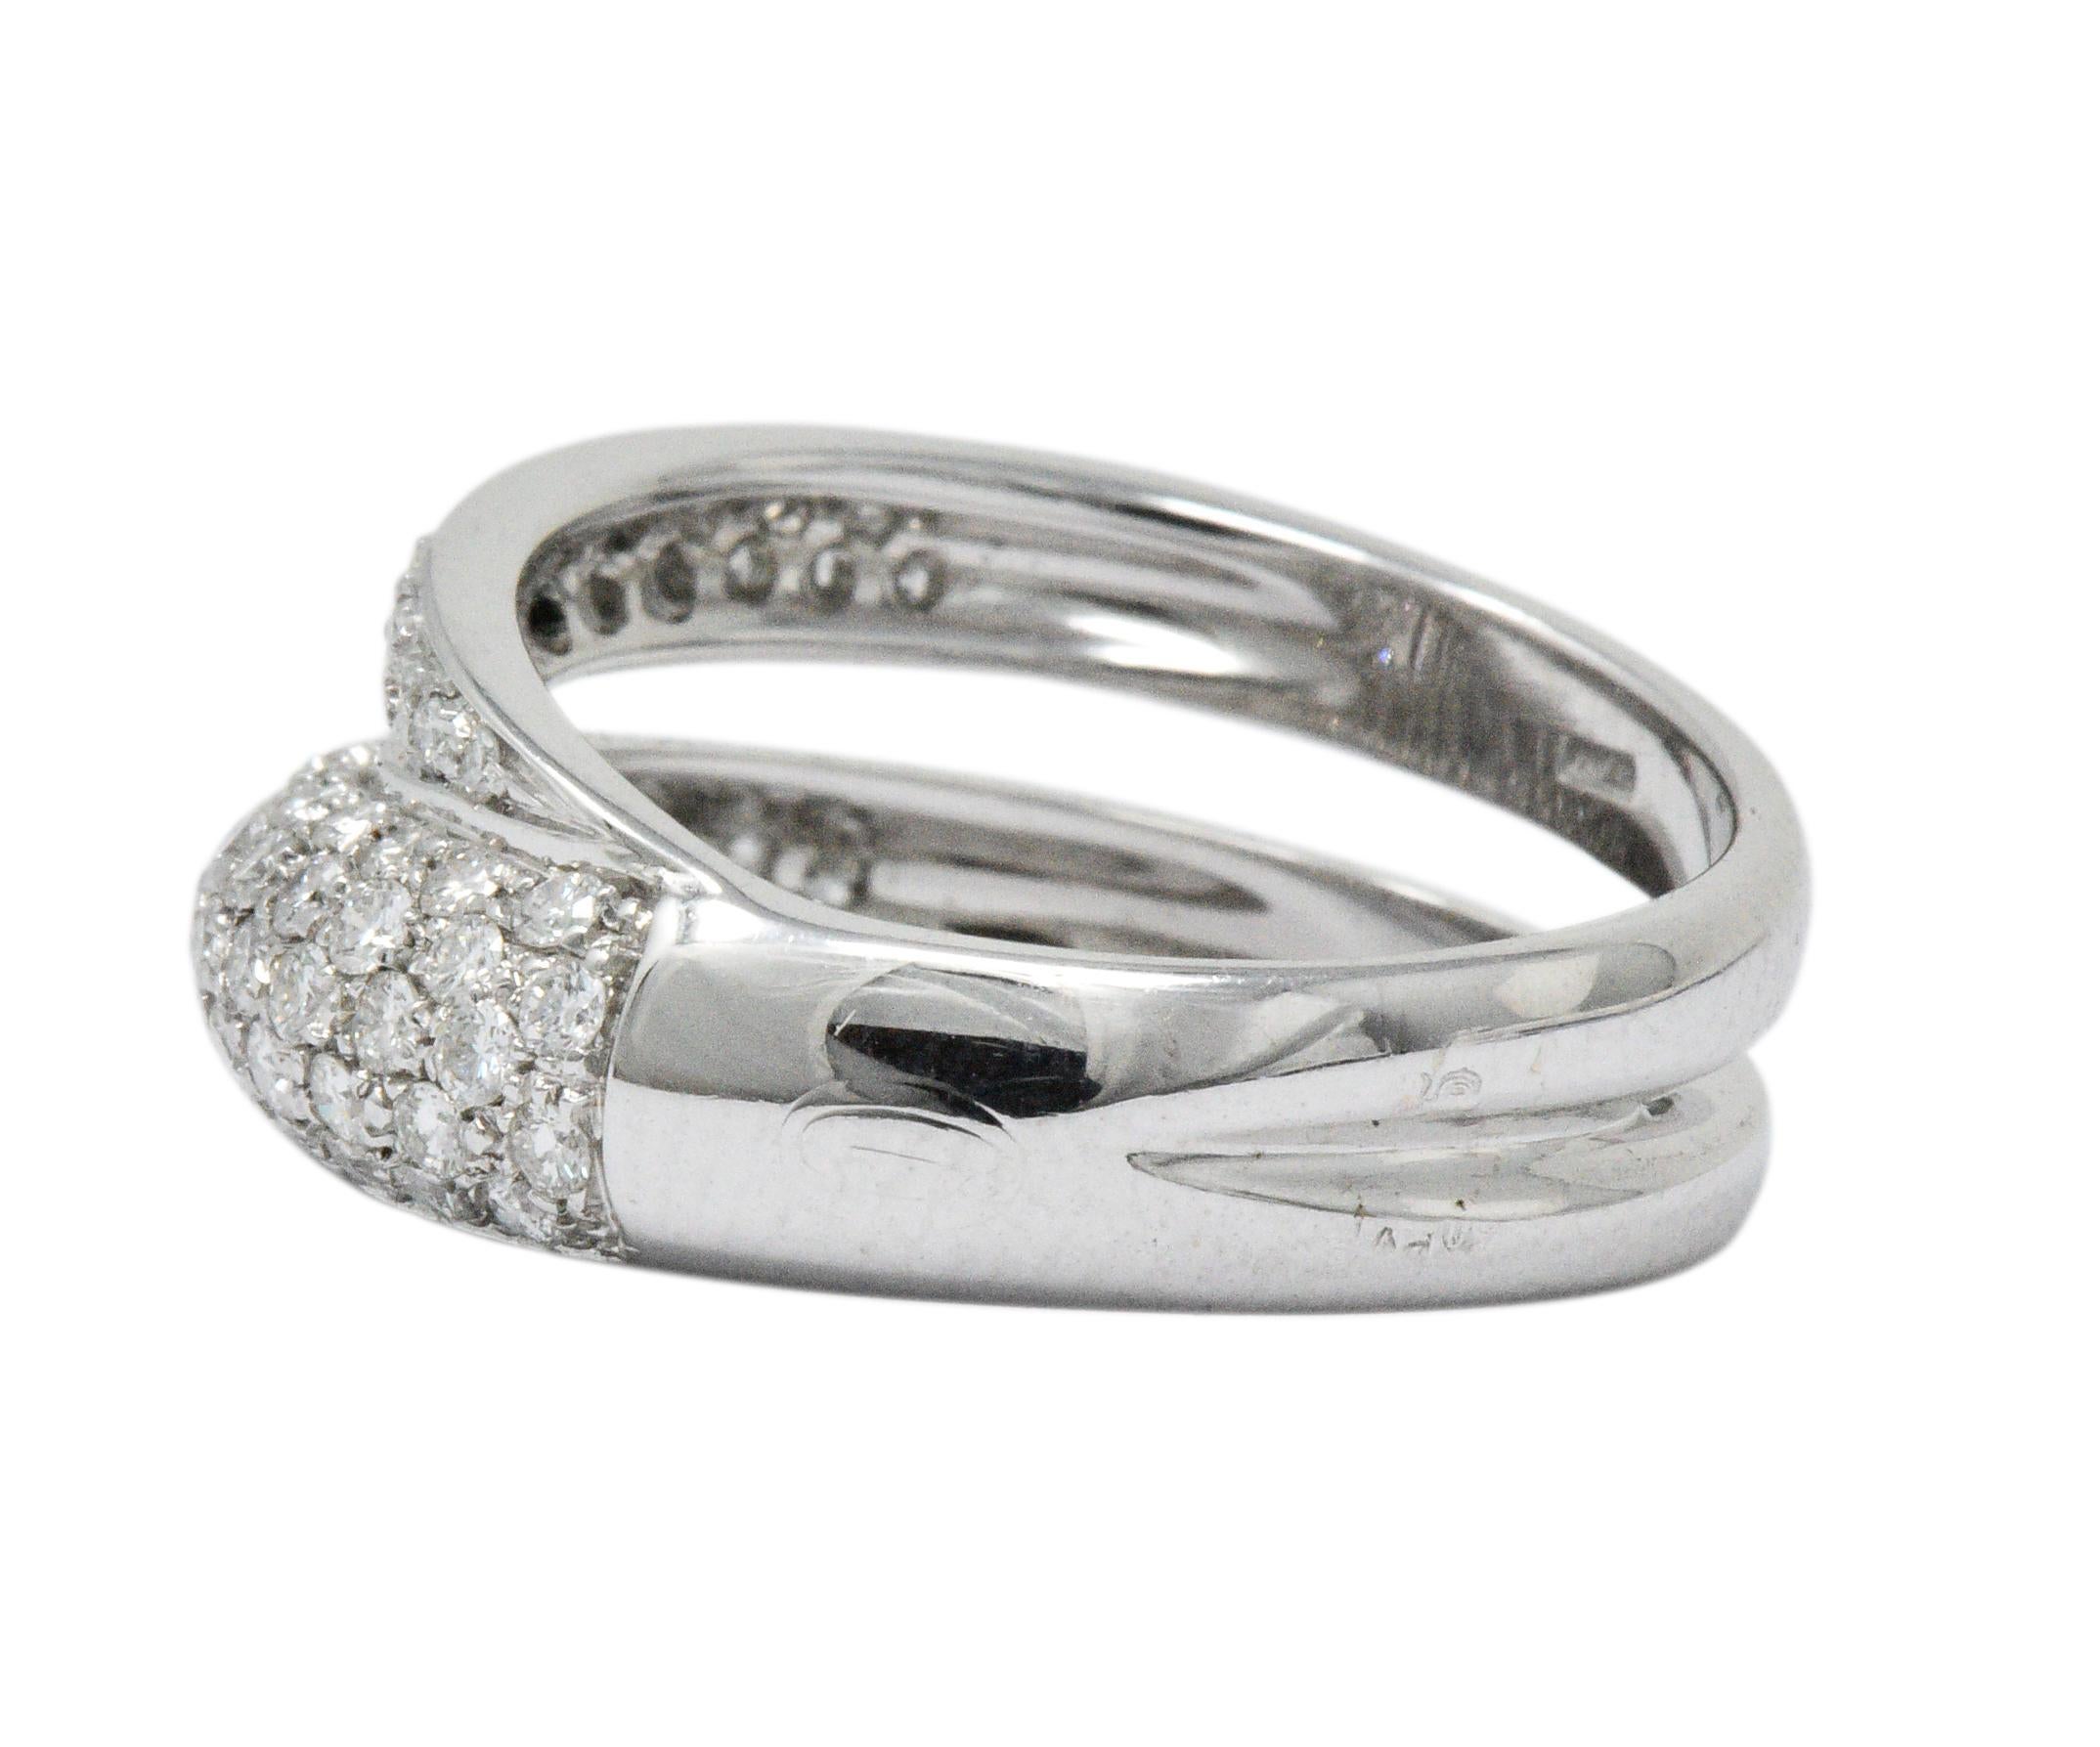 Damiani Contemporary 1.20 Carat Diamond 18 Karat White Gold Ring with Box 2